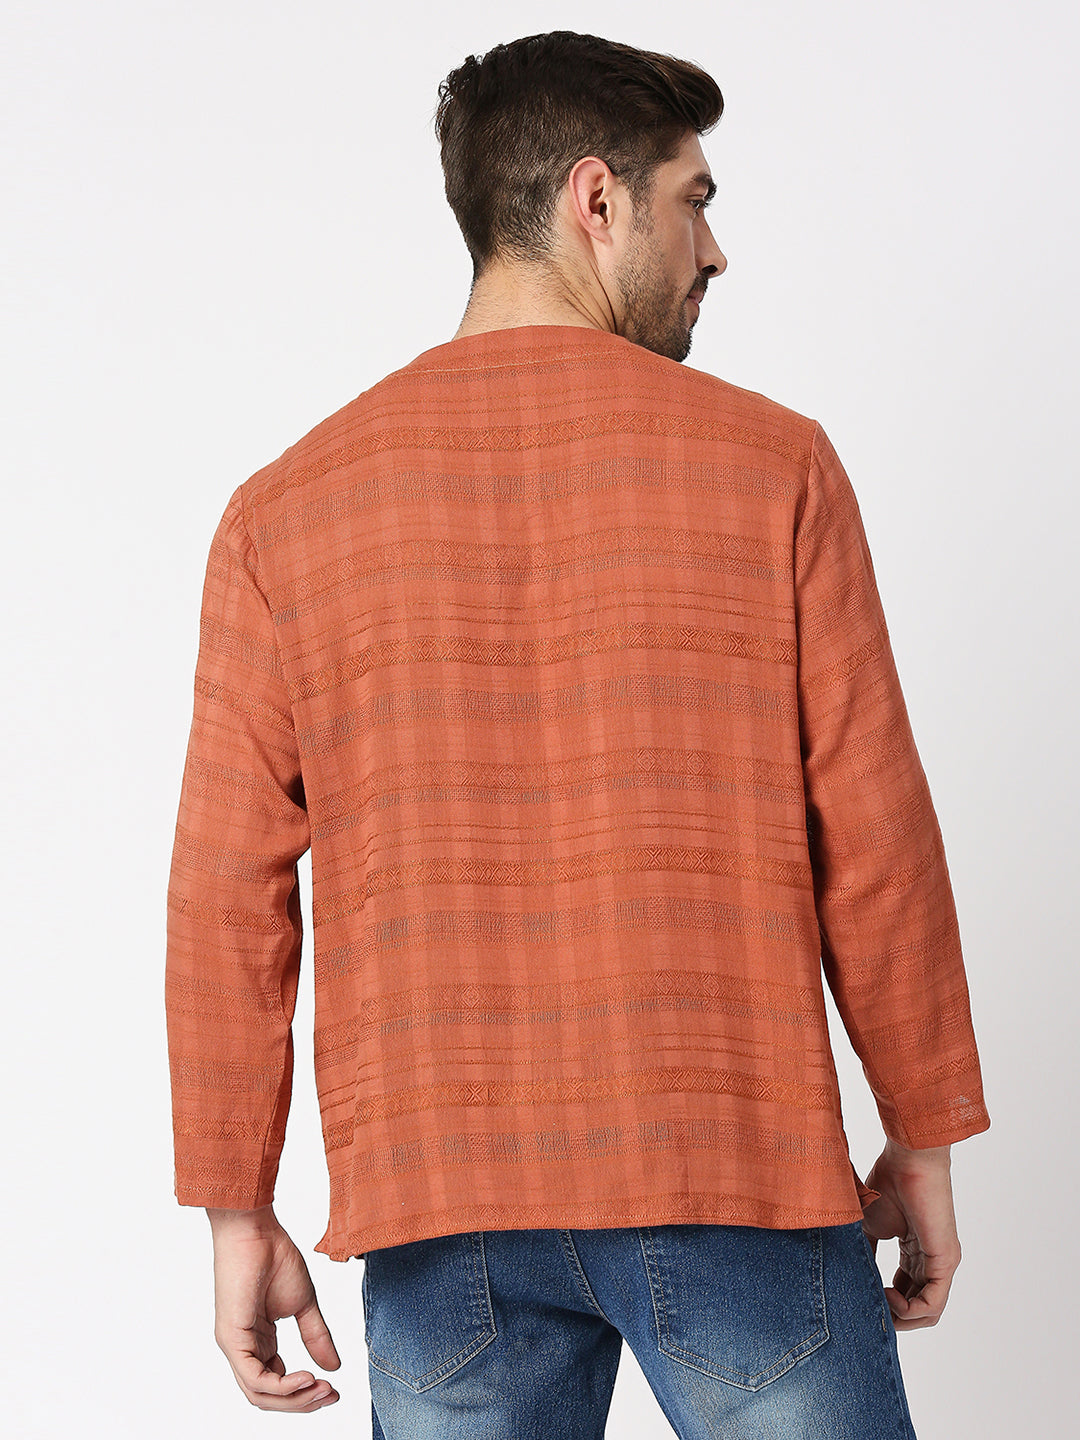 Buy BLAMBLACK Textured Full Sleeves Drawstring detail Round neck T-Shirt